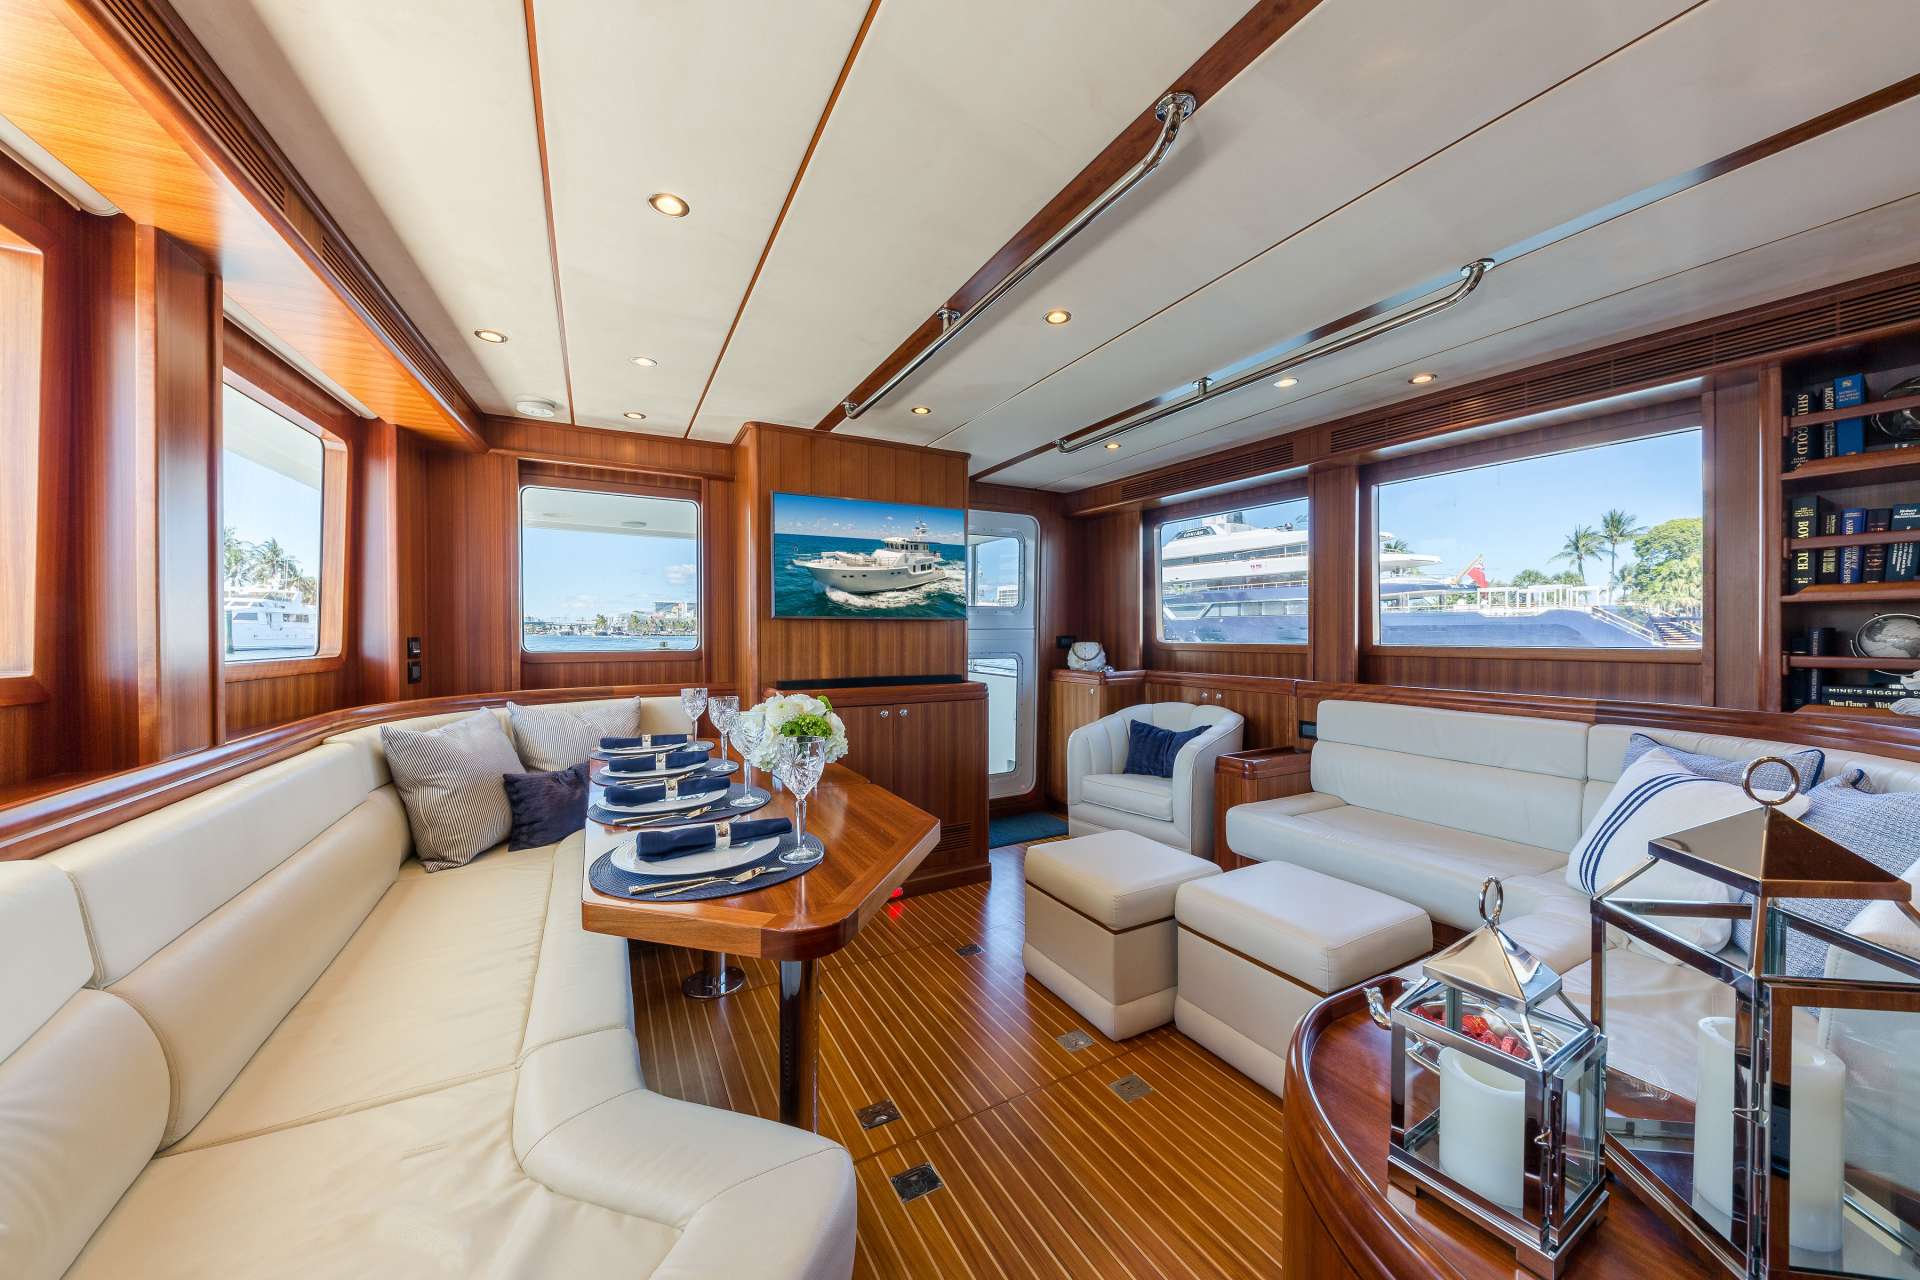 ASTURIAS Yacht Charter - Salon